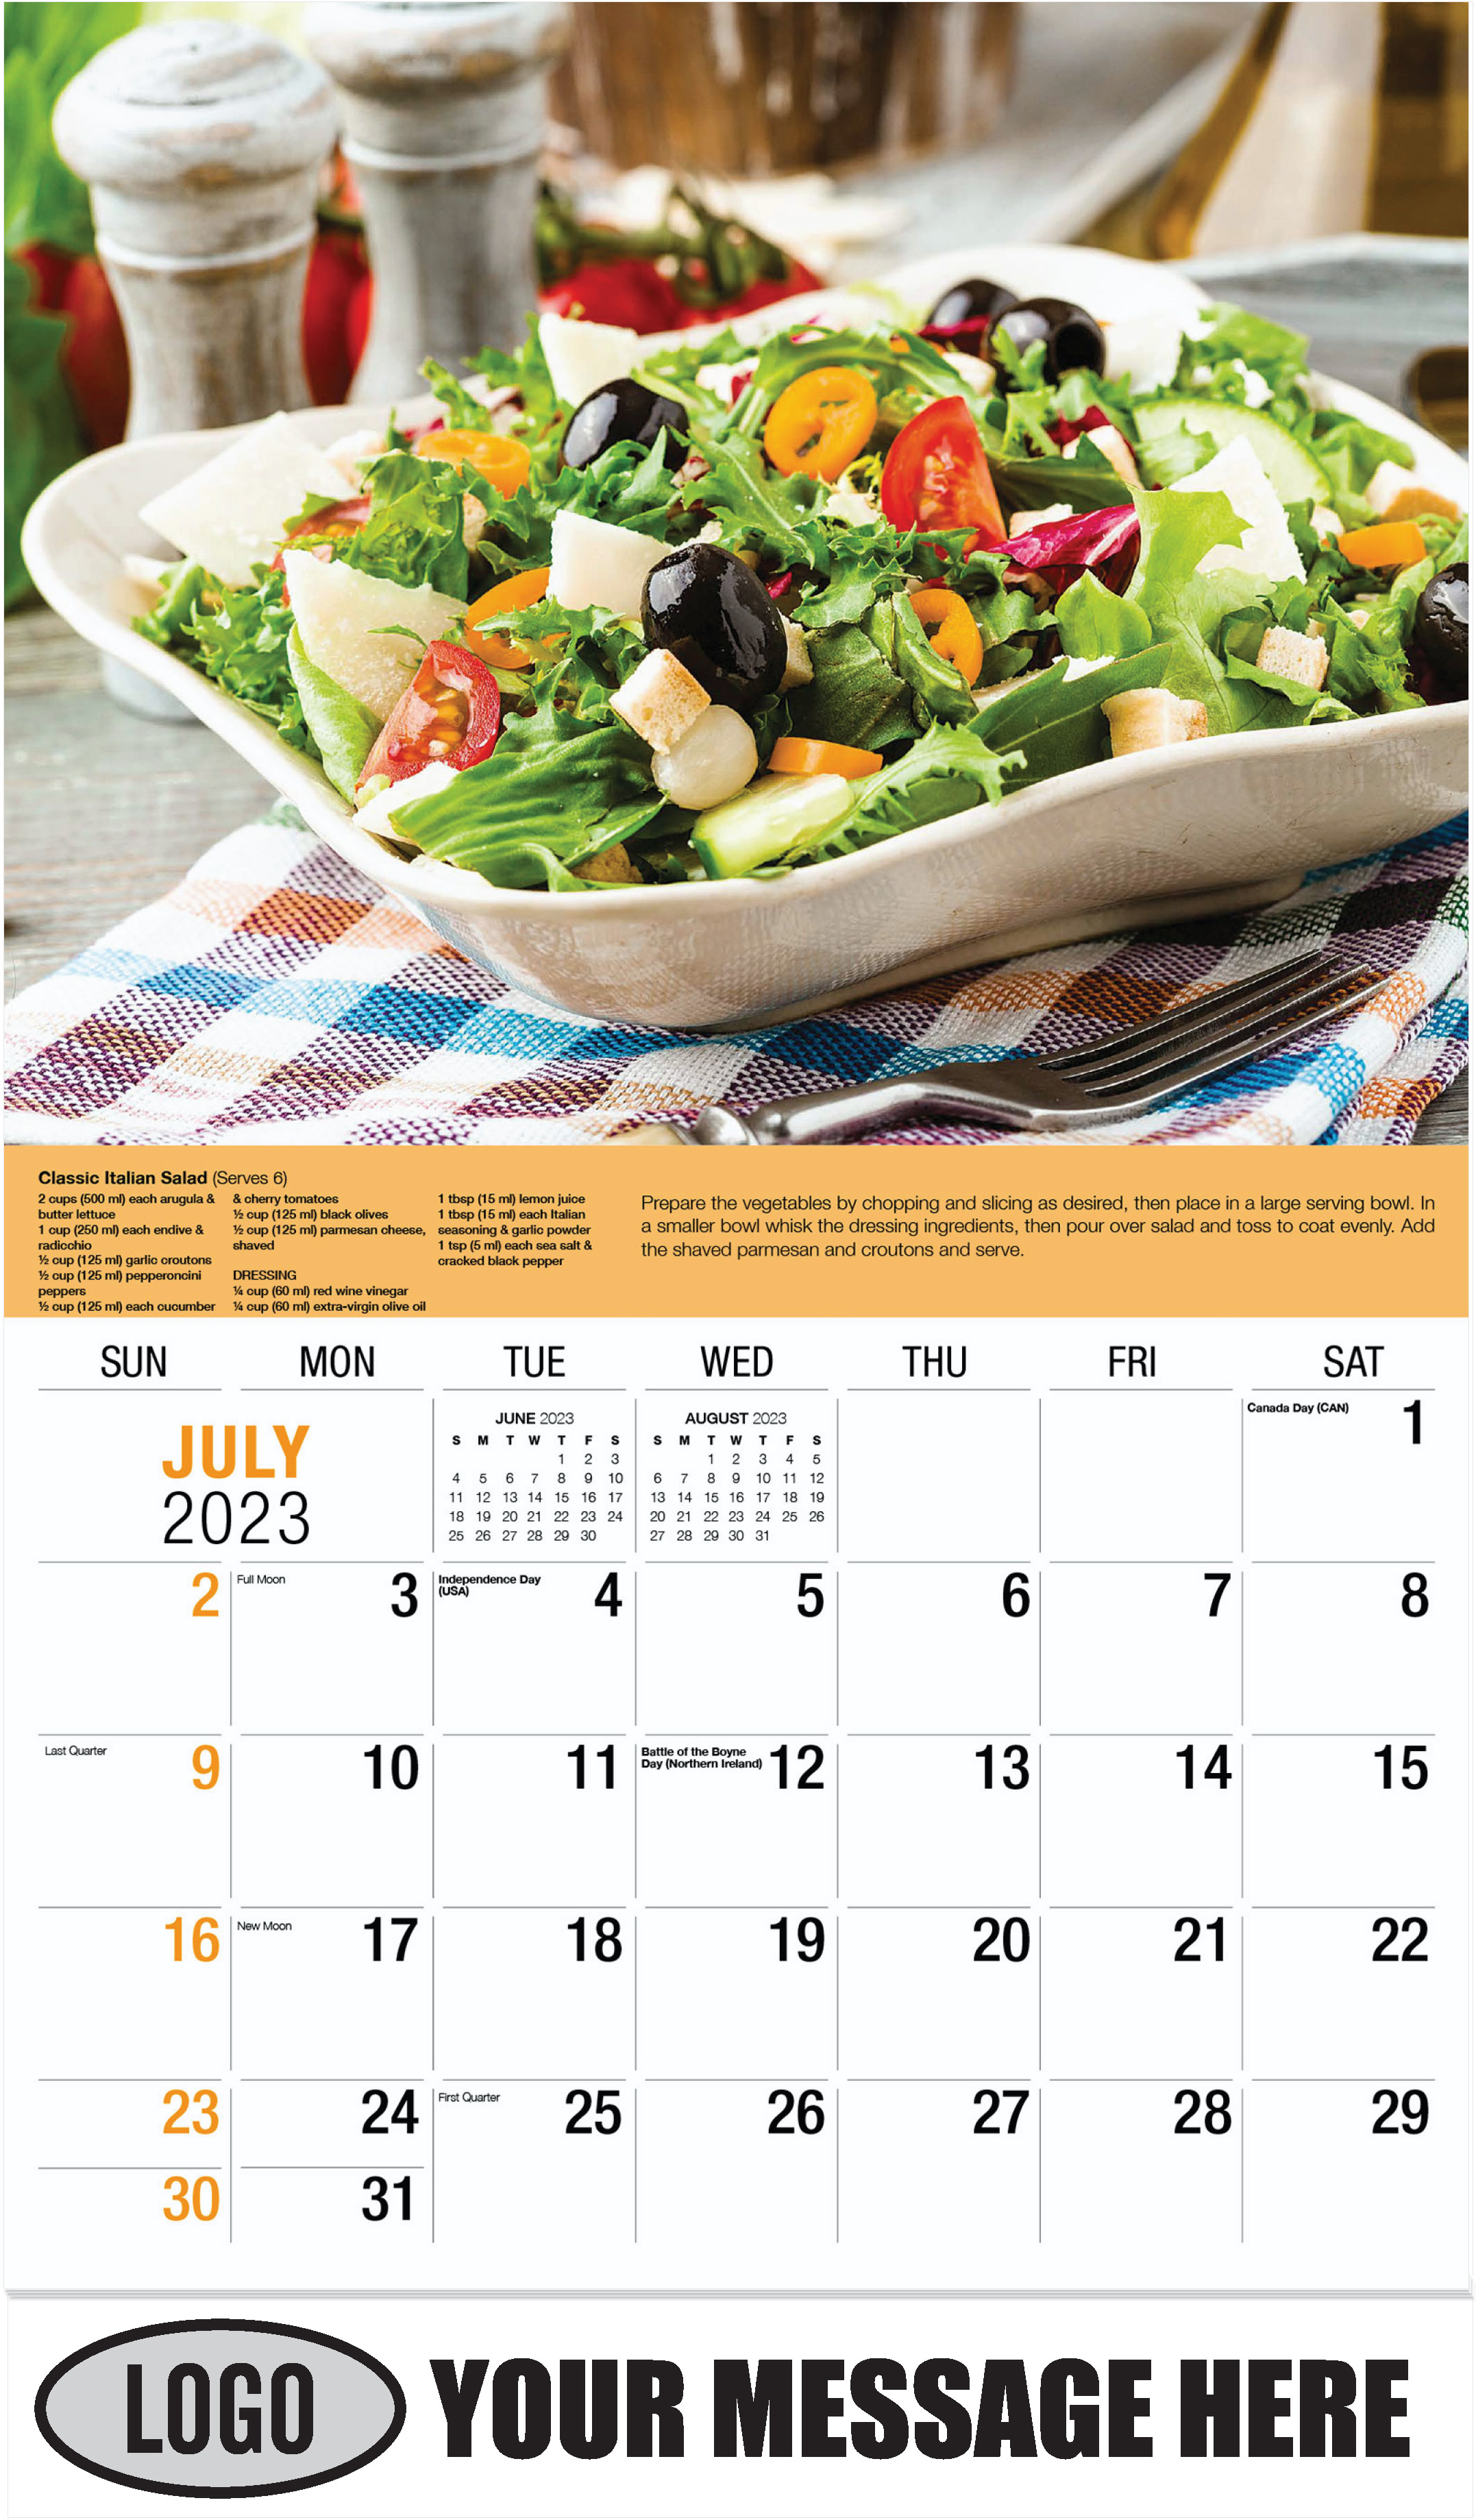 July - Recipes 2023 Promotional Calendar